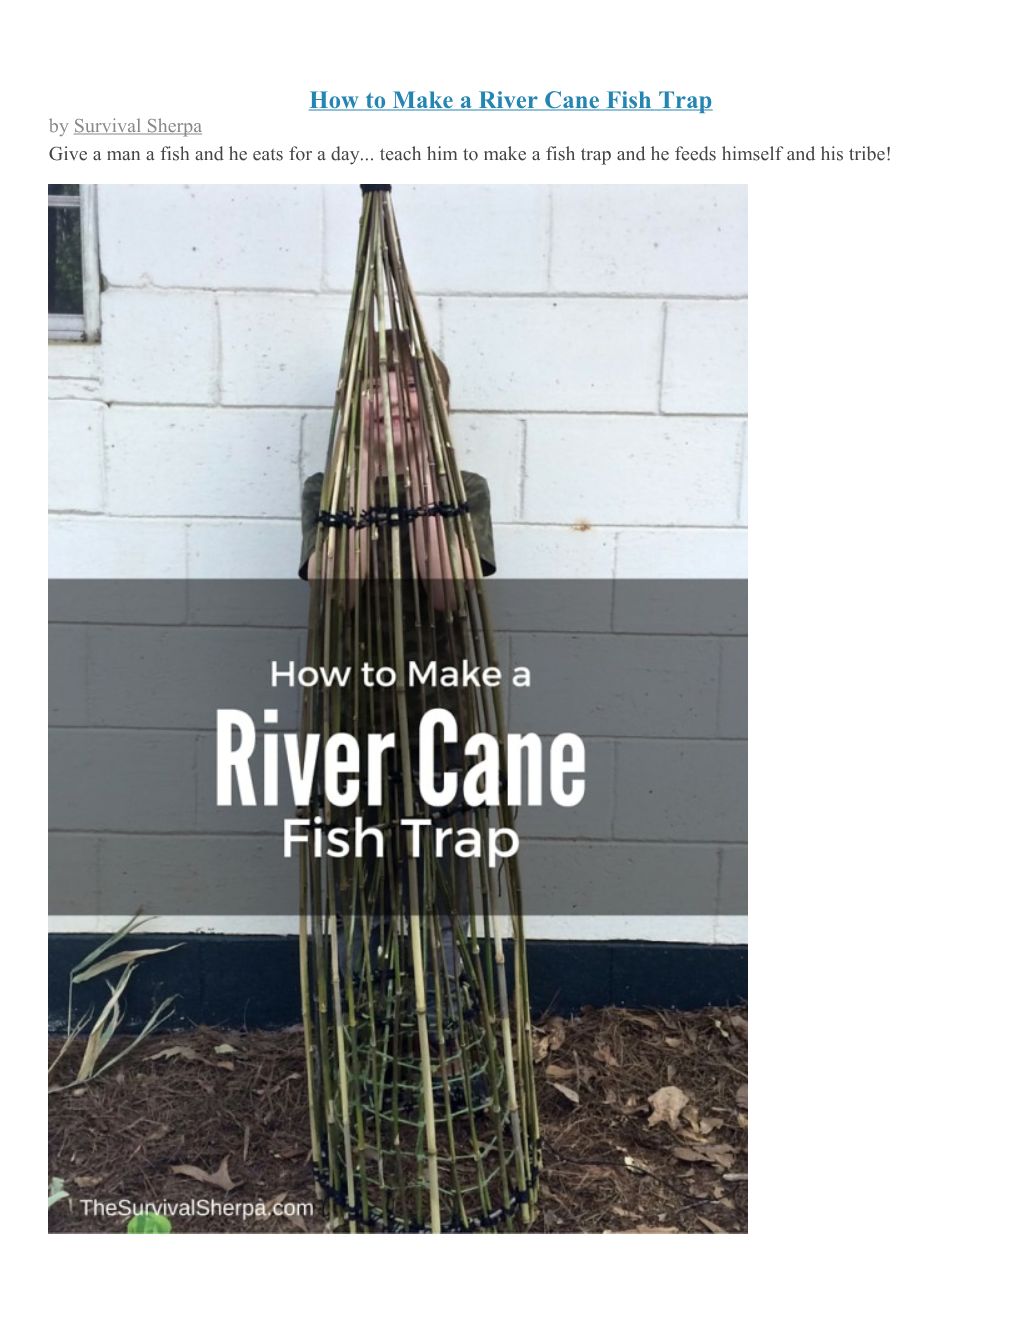 Building a River Cane Fish Trap